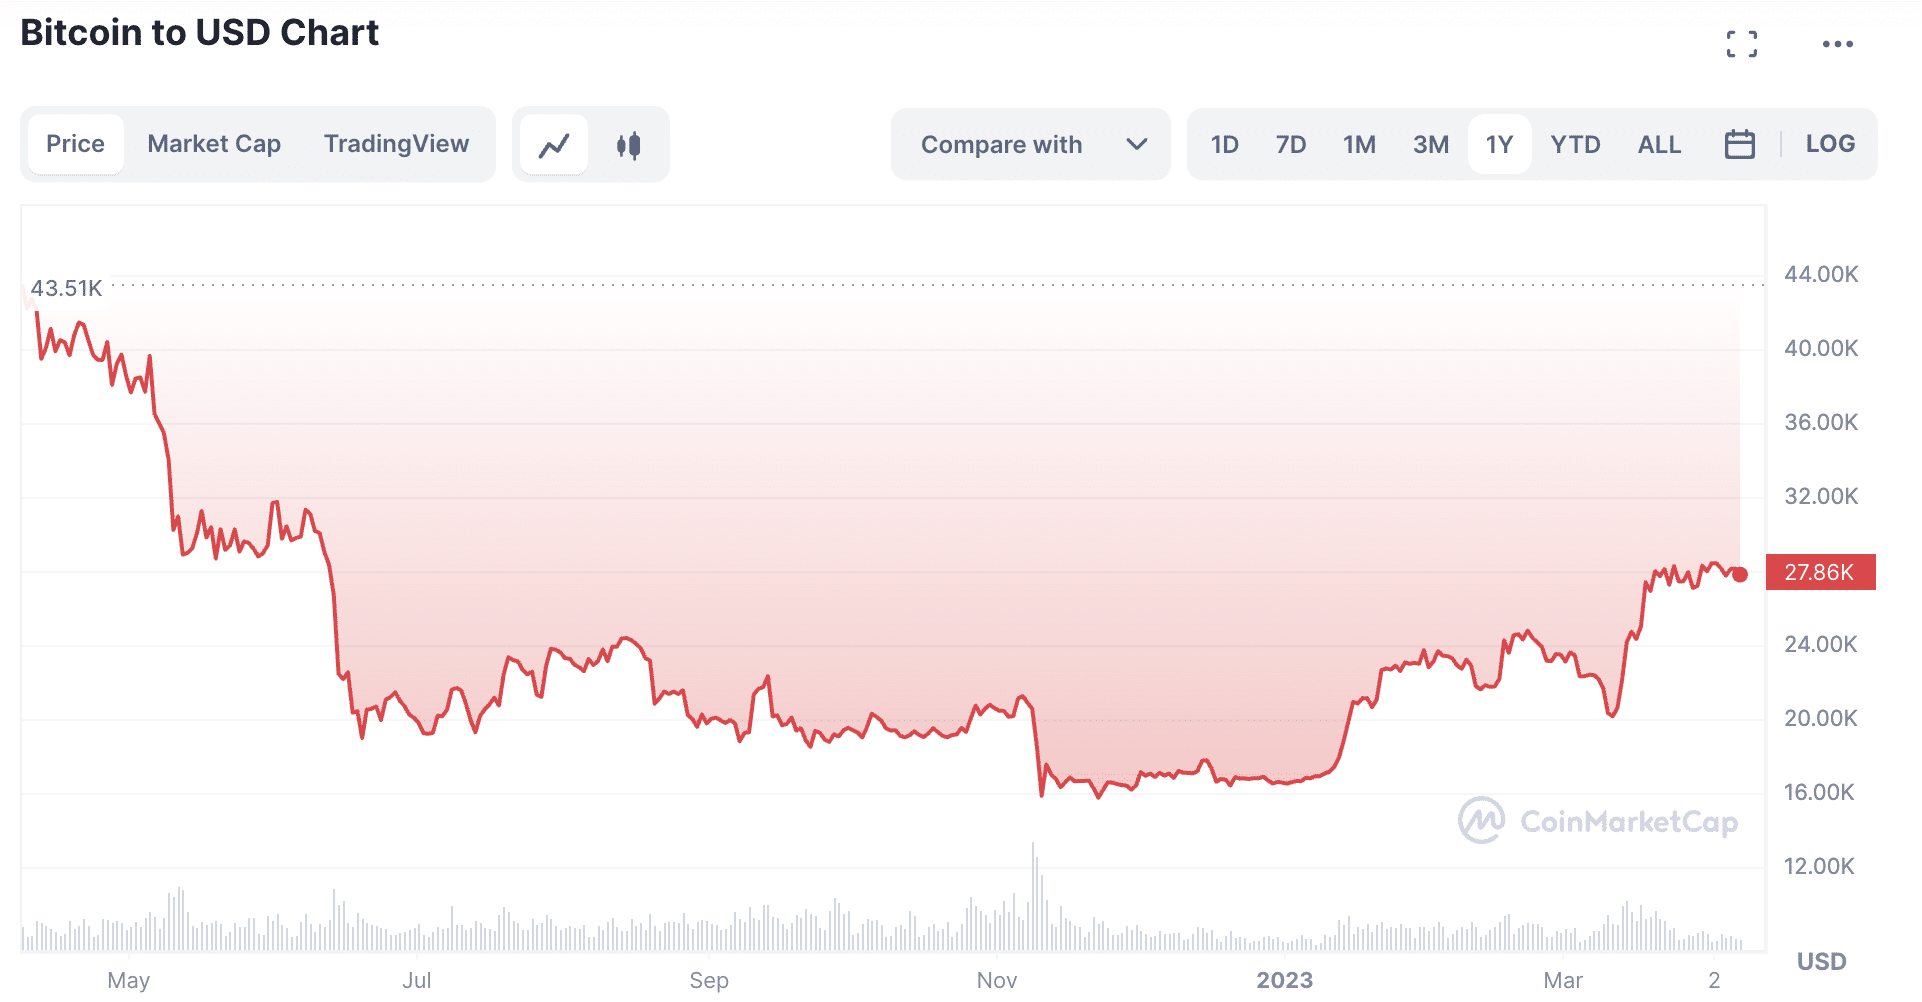 BTC/USD price | Source: CoinMarketCap